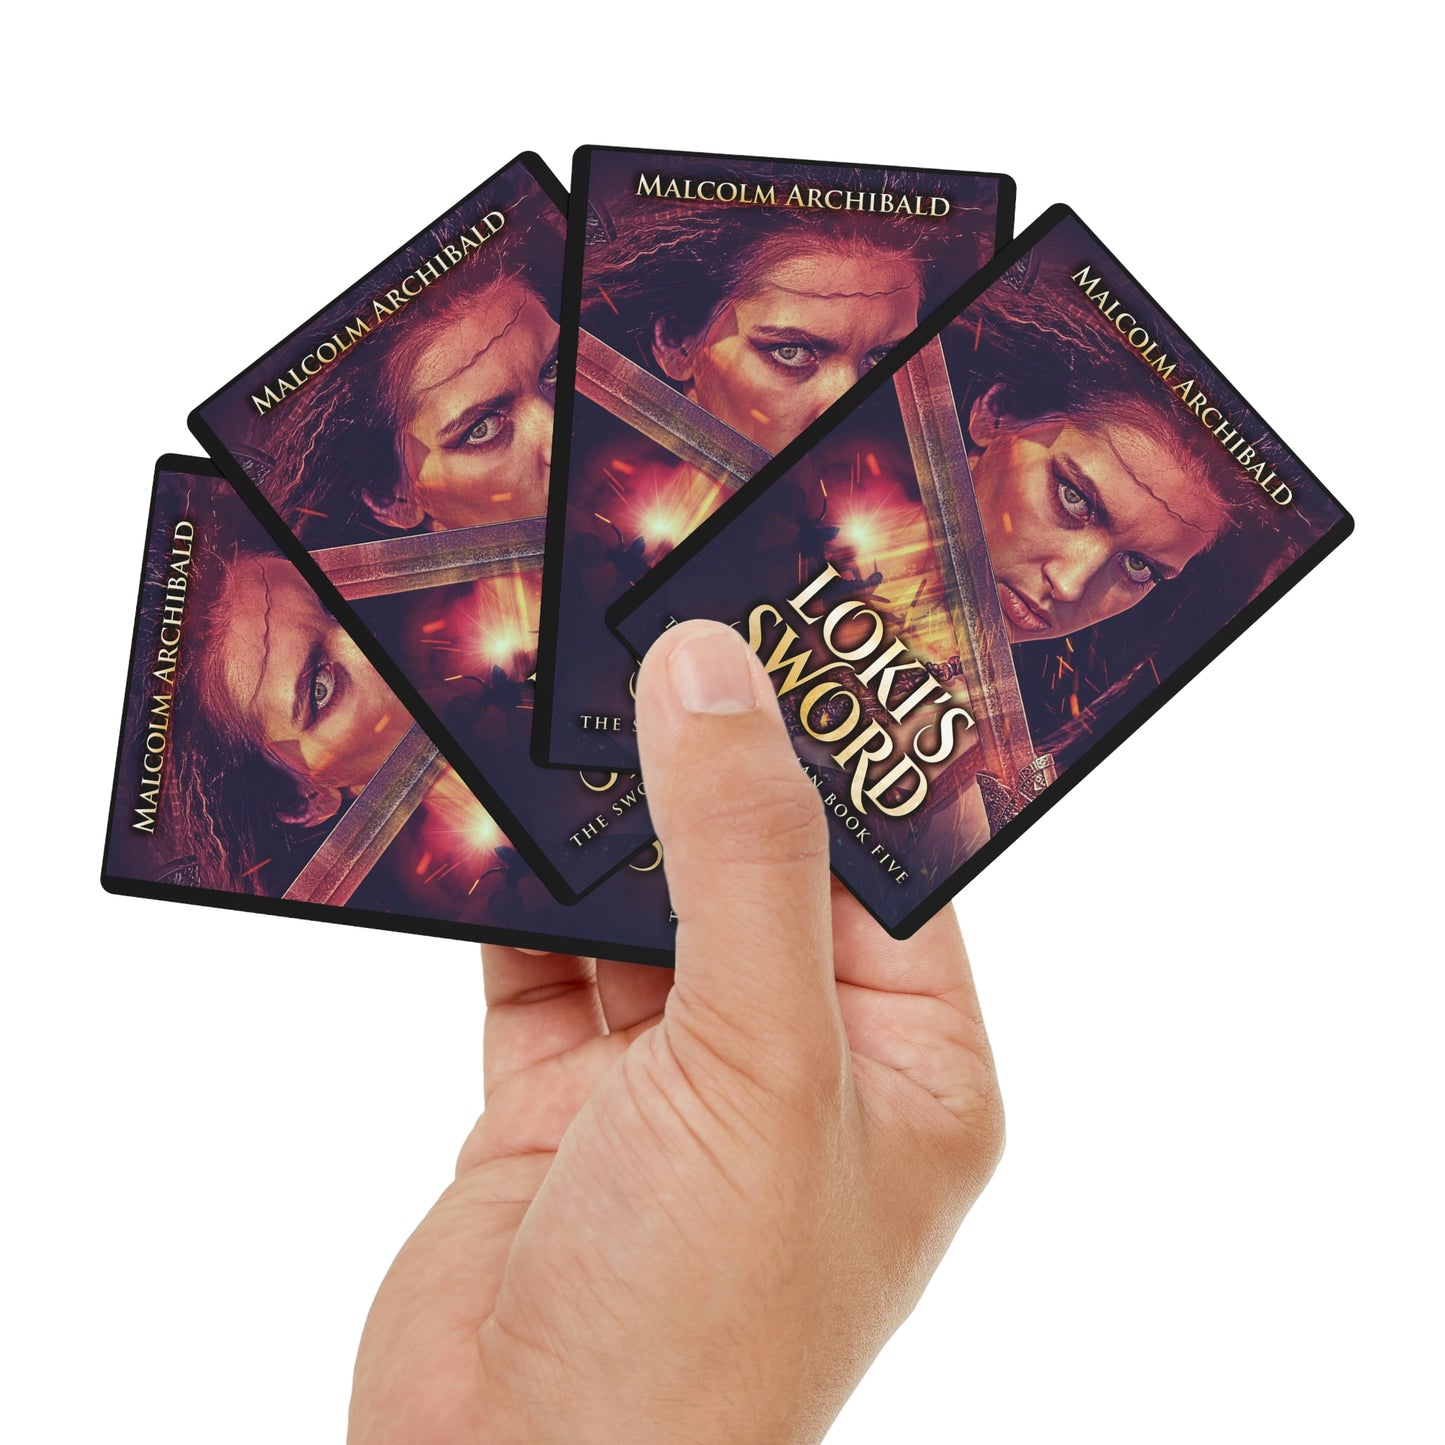 Loki's Sword - Playing Cards